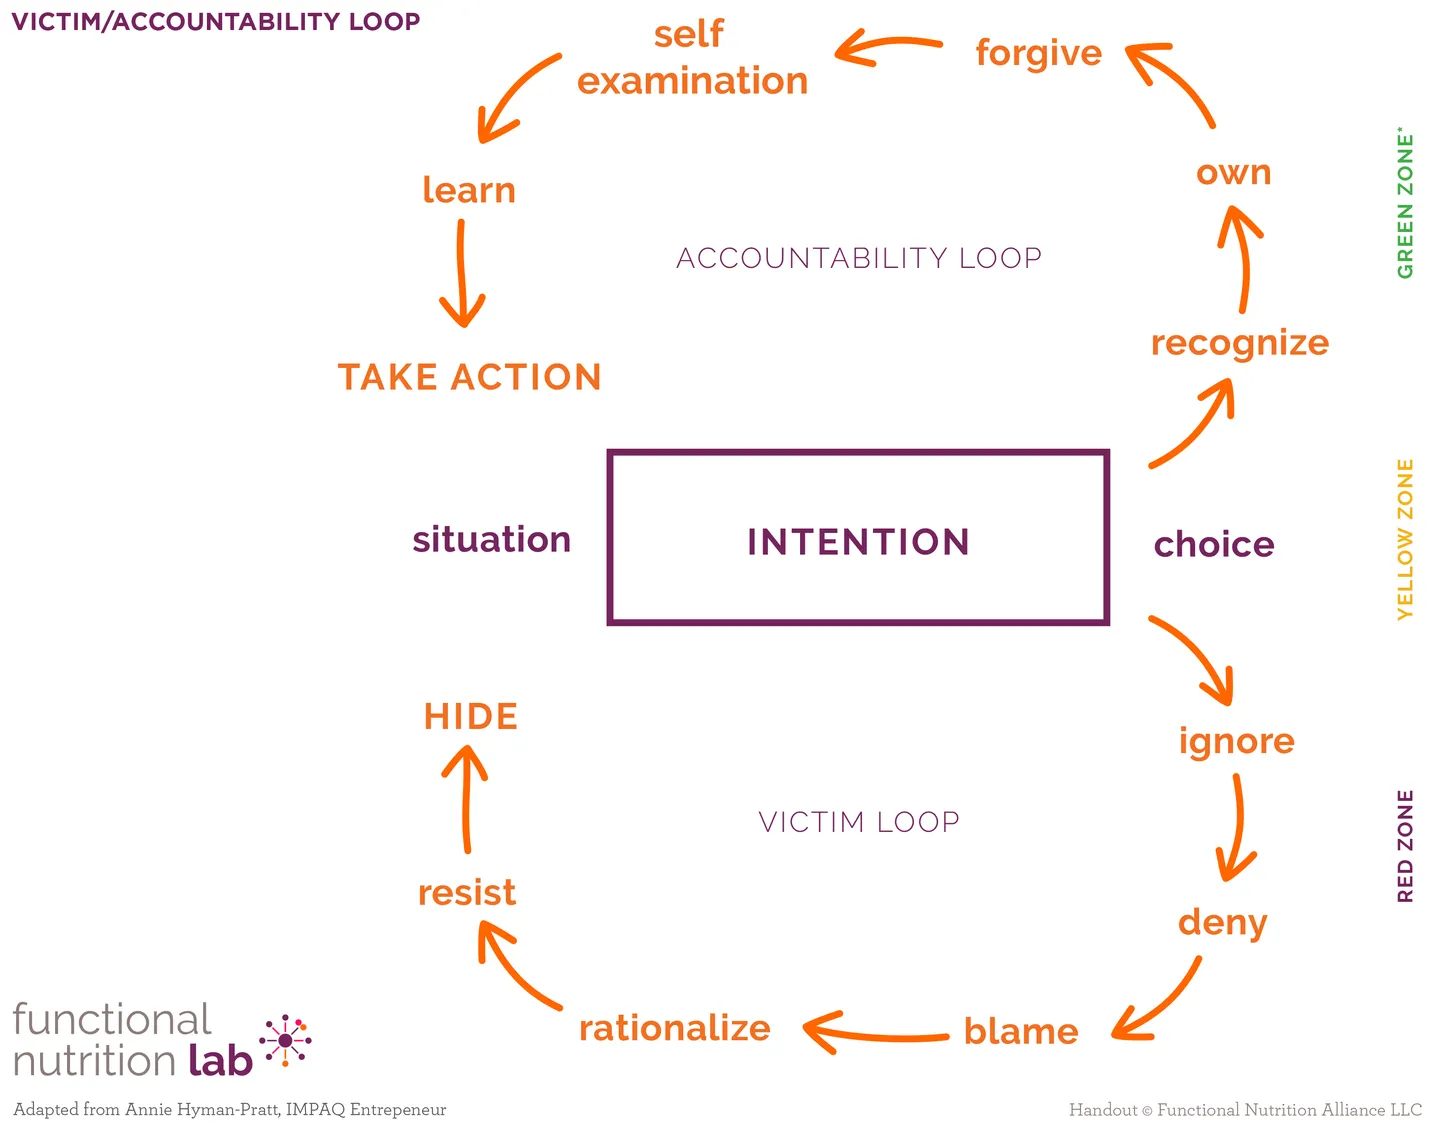 victim accountability loop | Functional Nutrition Lab